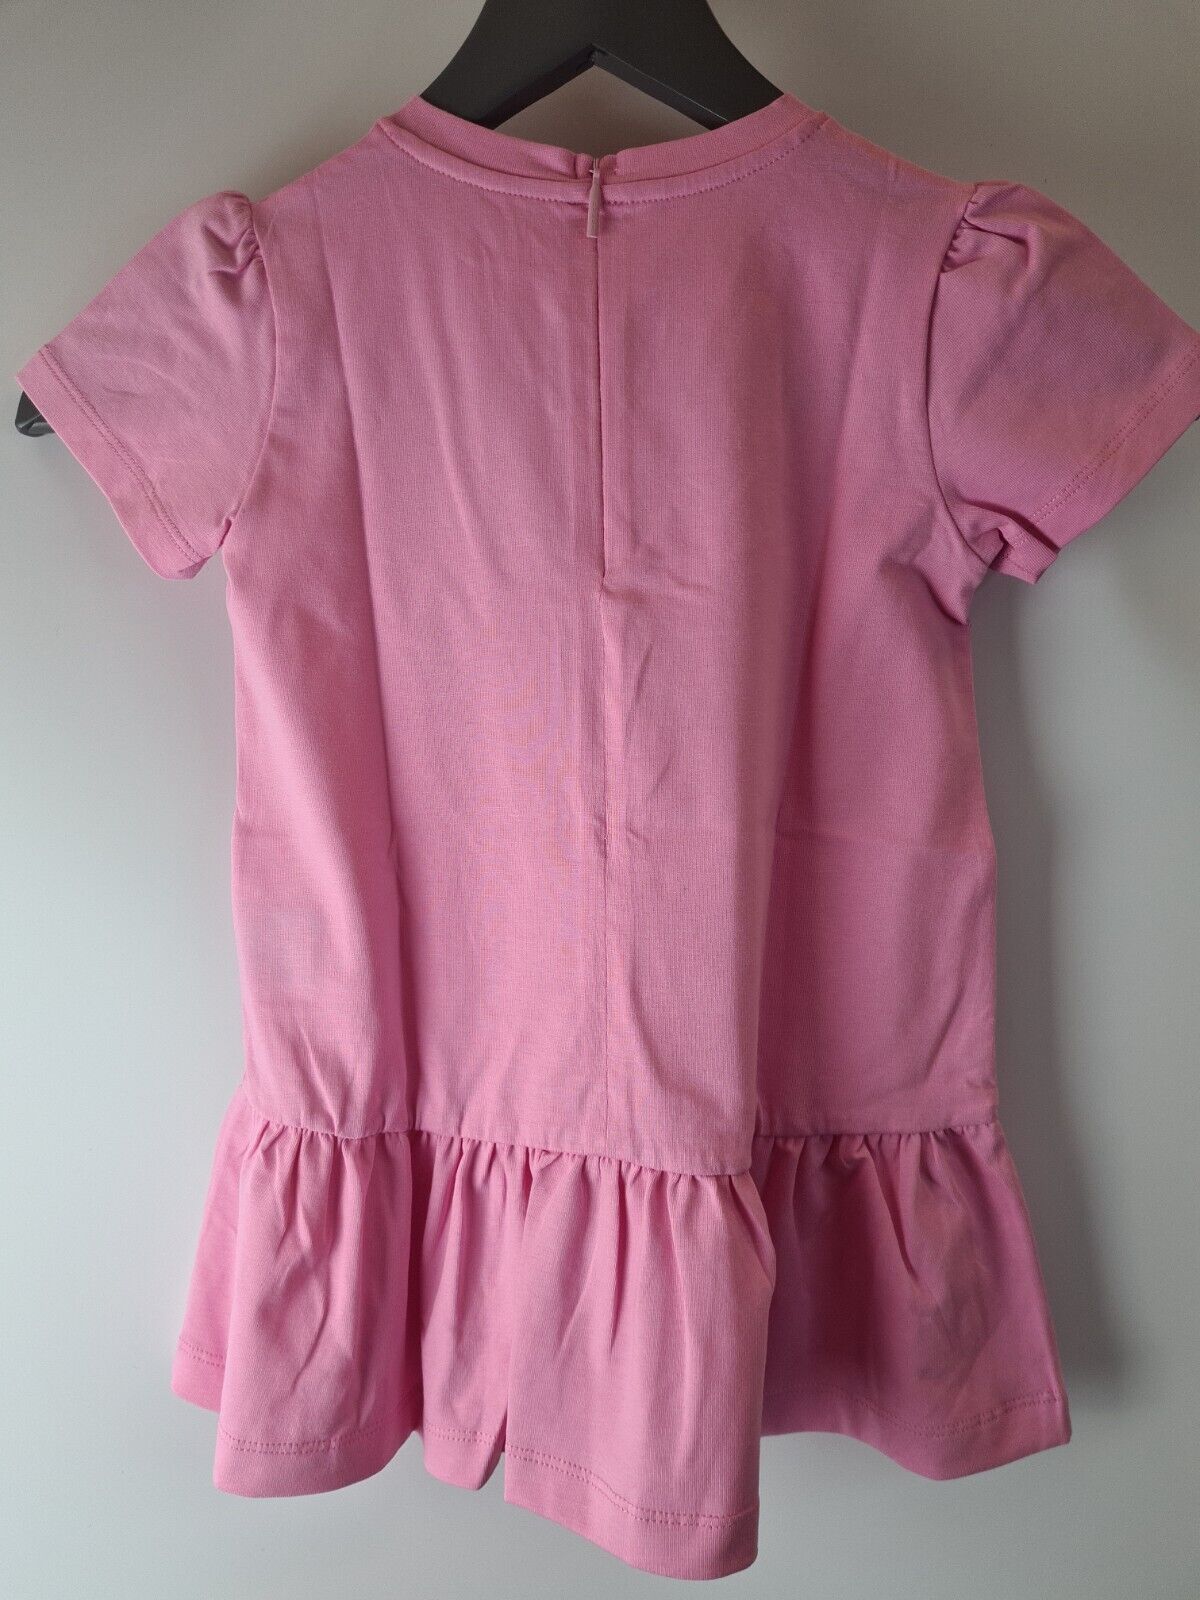 Emilio Pucci Baby Girls Pink Cotton Logo Dress Size 18 Months **** V418